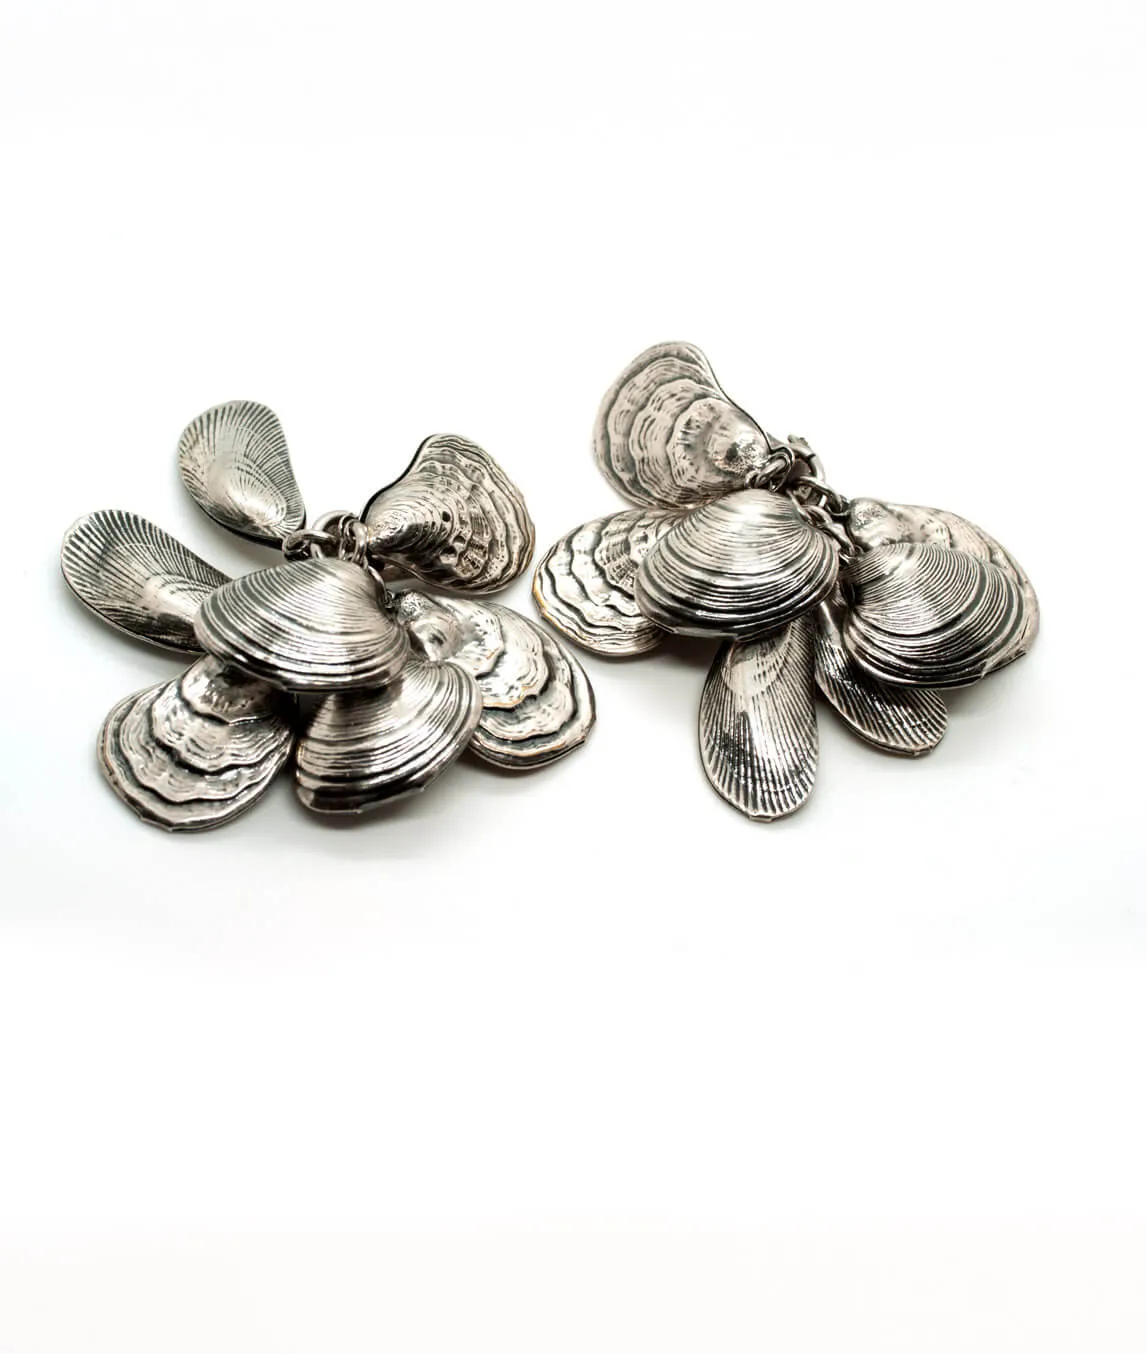 Vintage Napier shell earrings